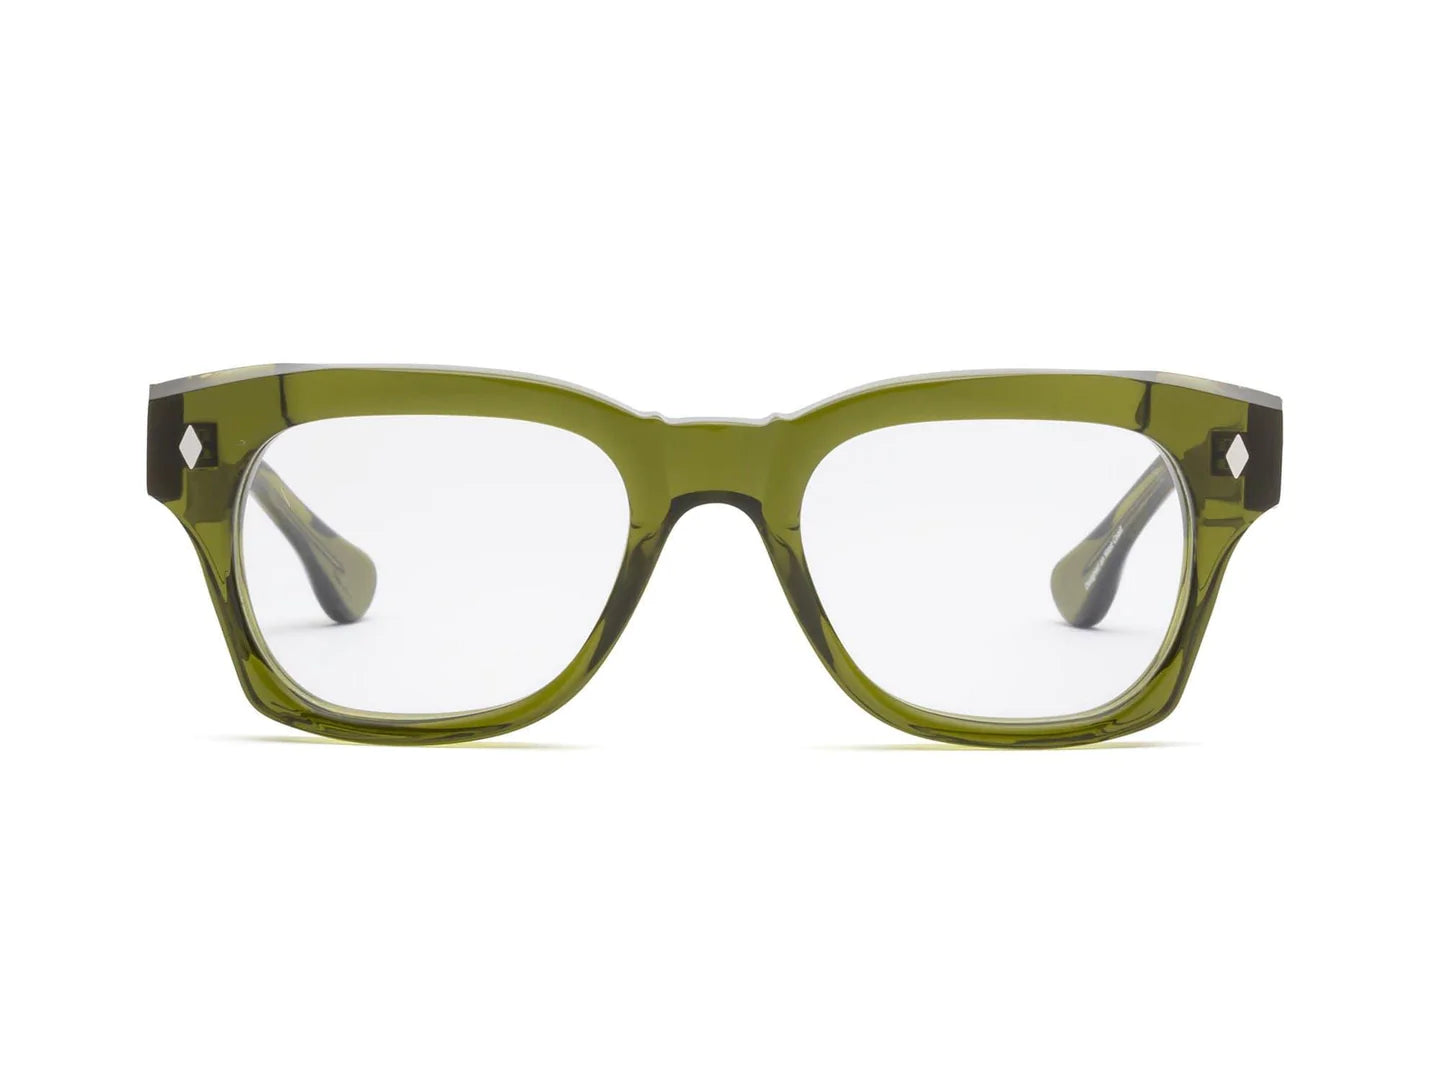 CADDIS Muzzy Reading Glasses - Heritage Green